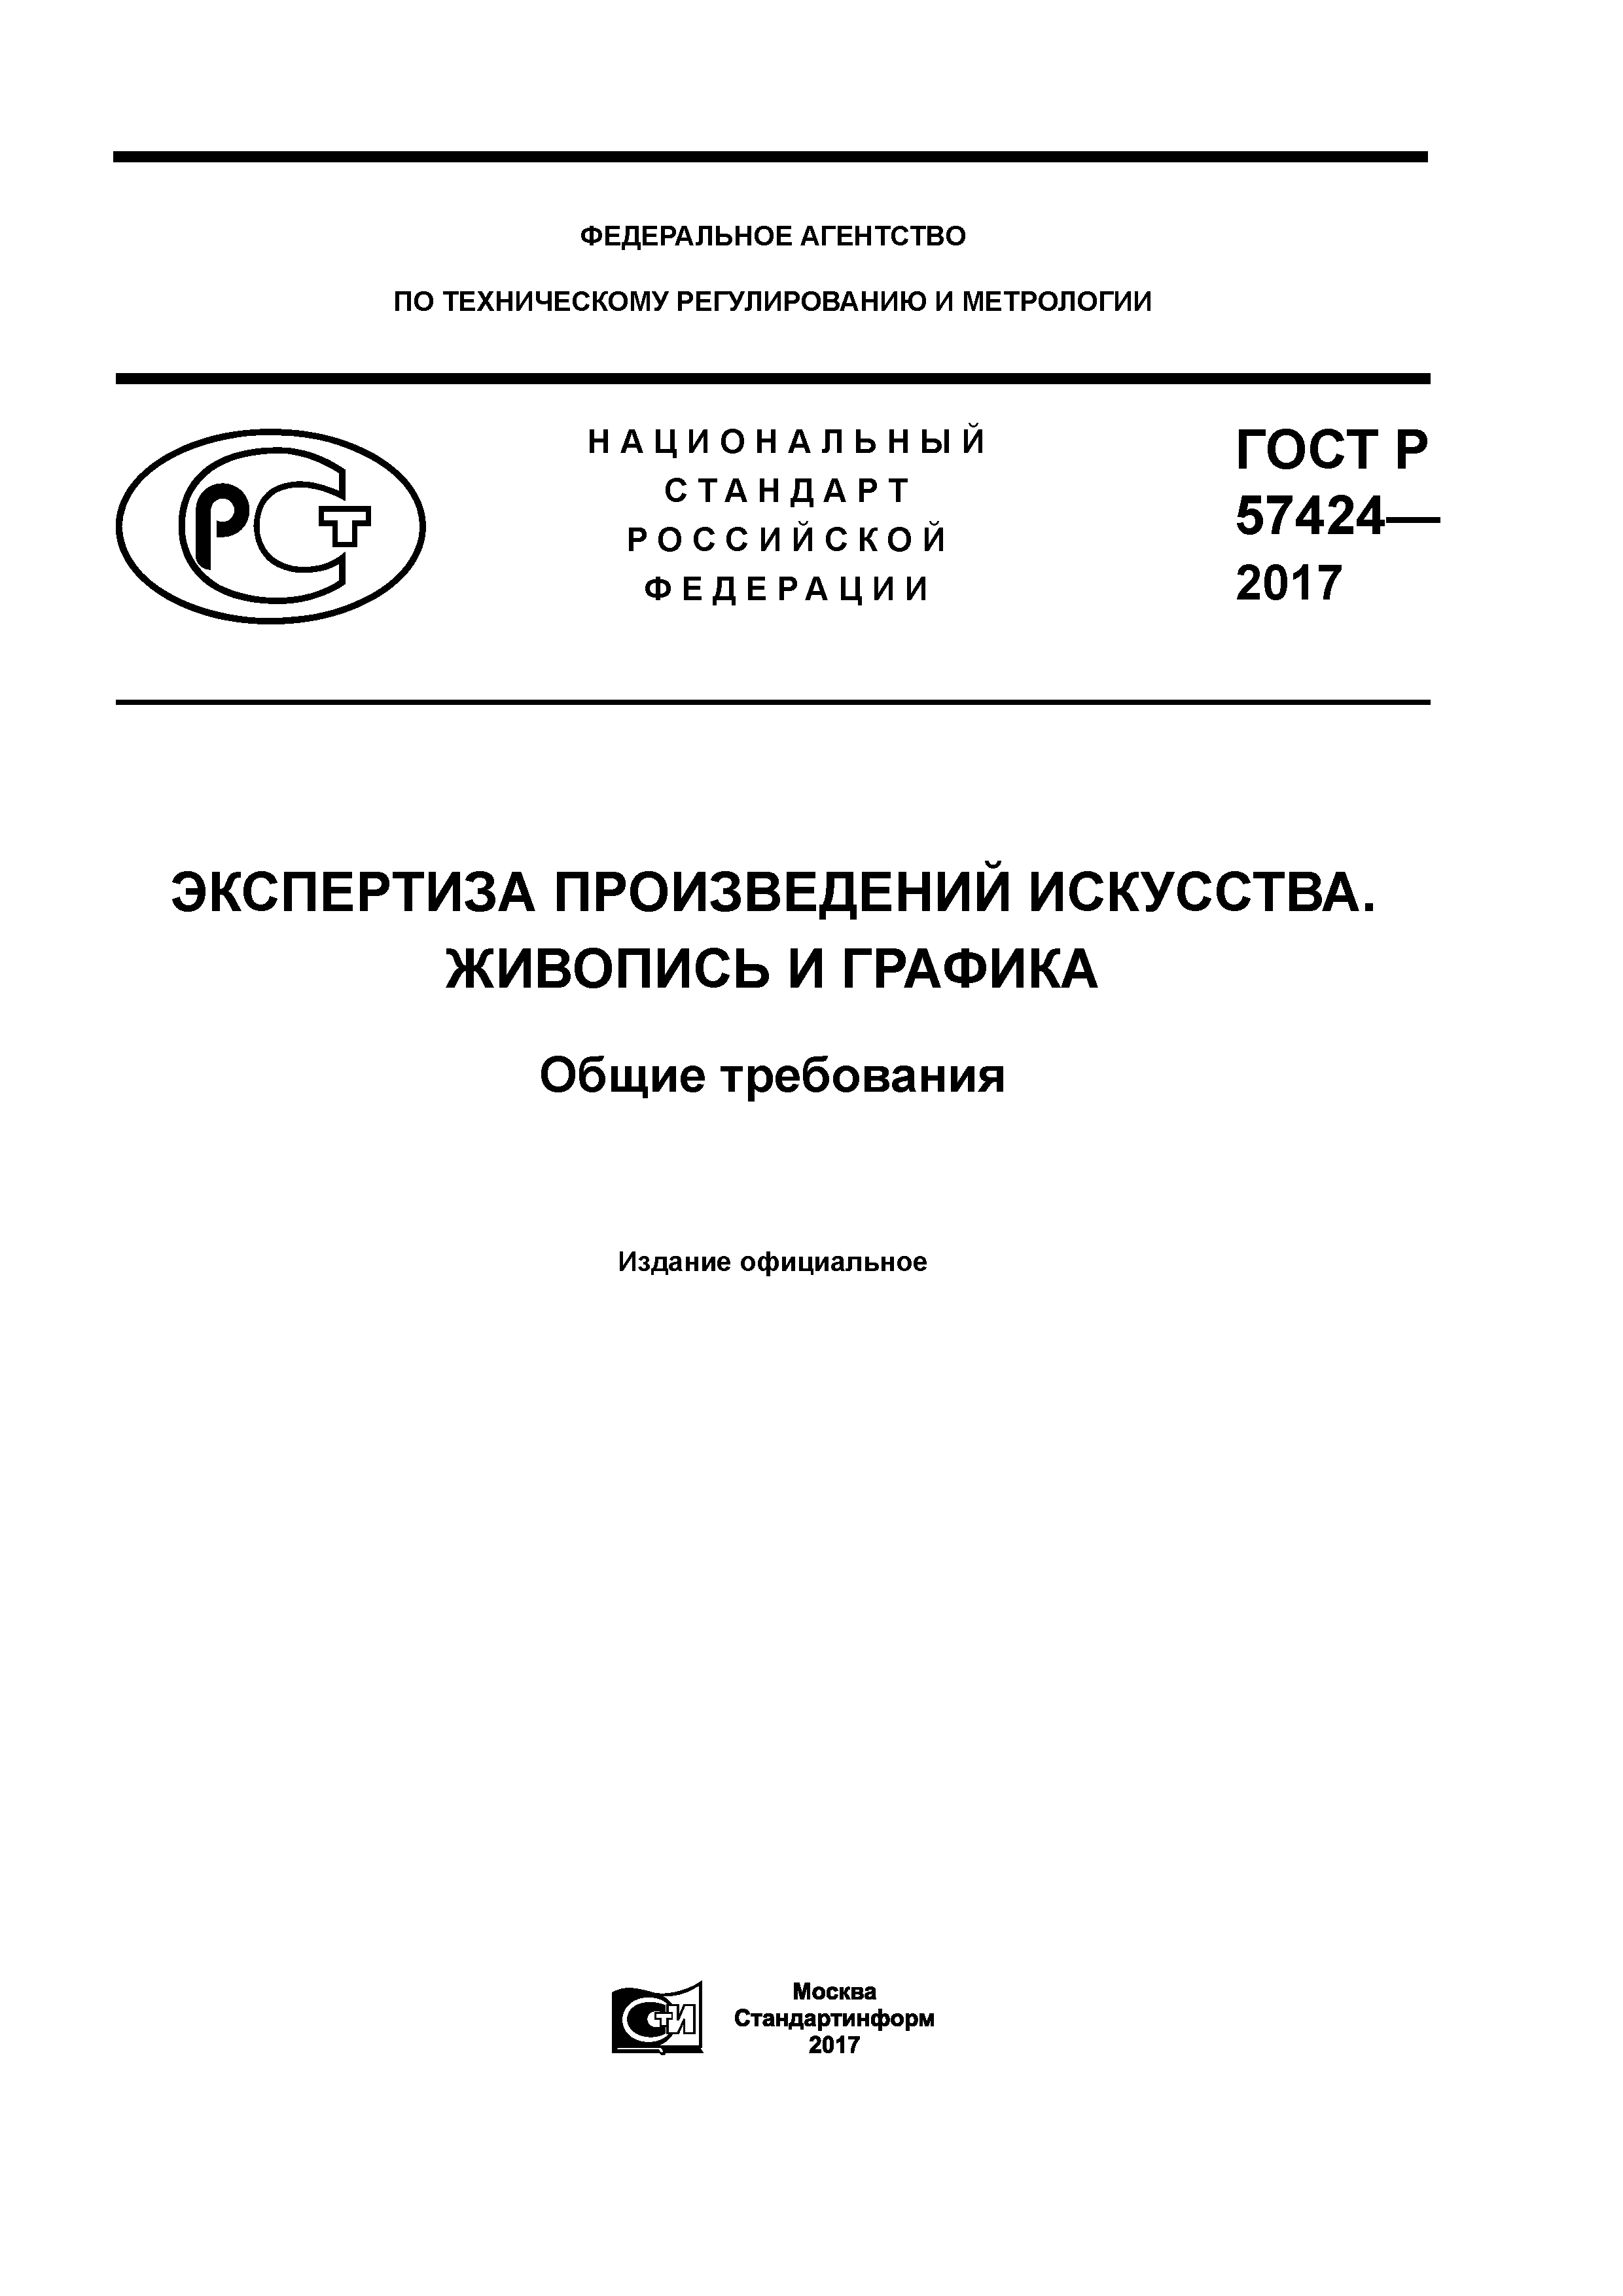 ГОСТ Р 57424-2017